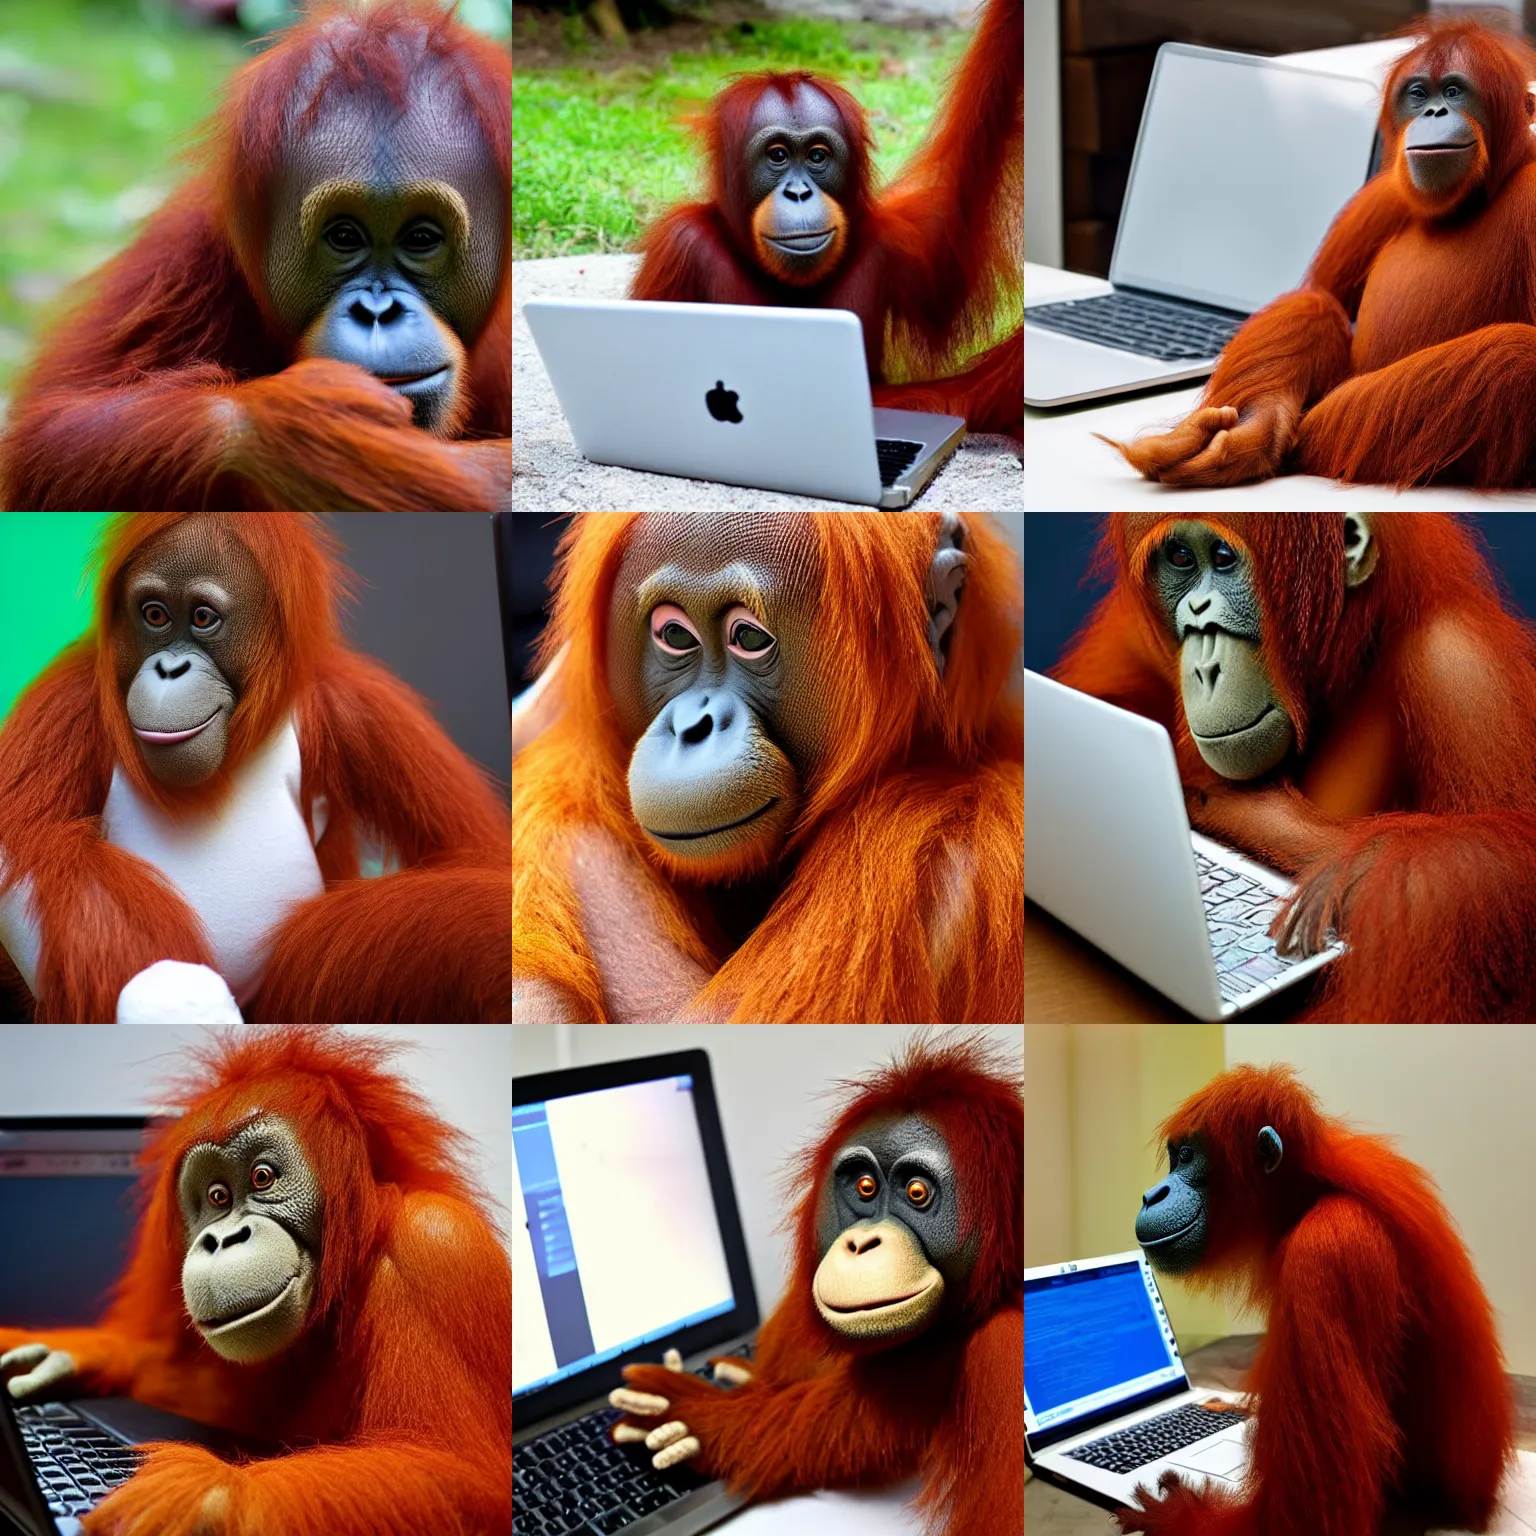 Prompt: an orangutan fluffy plush using a computer